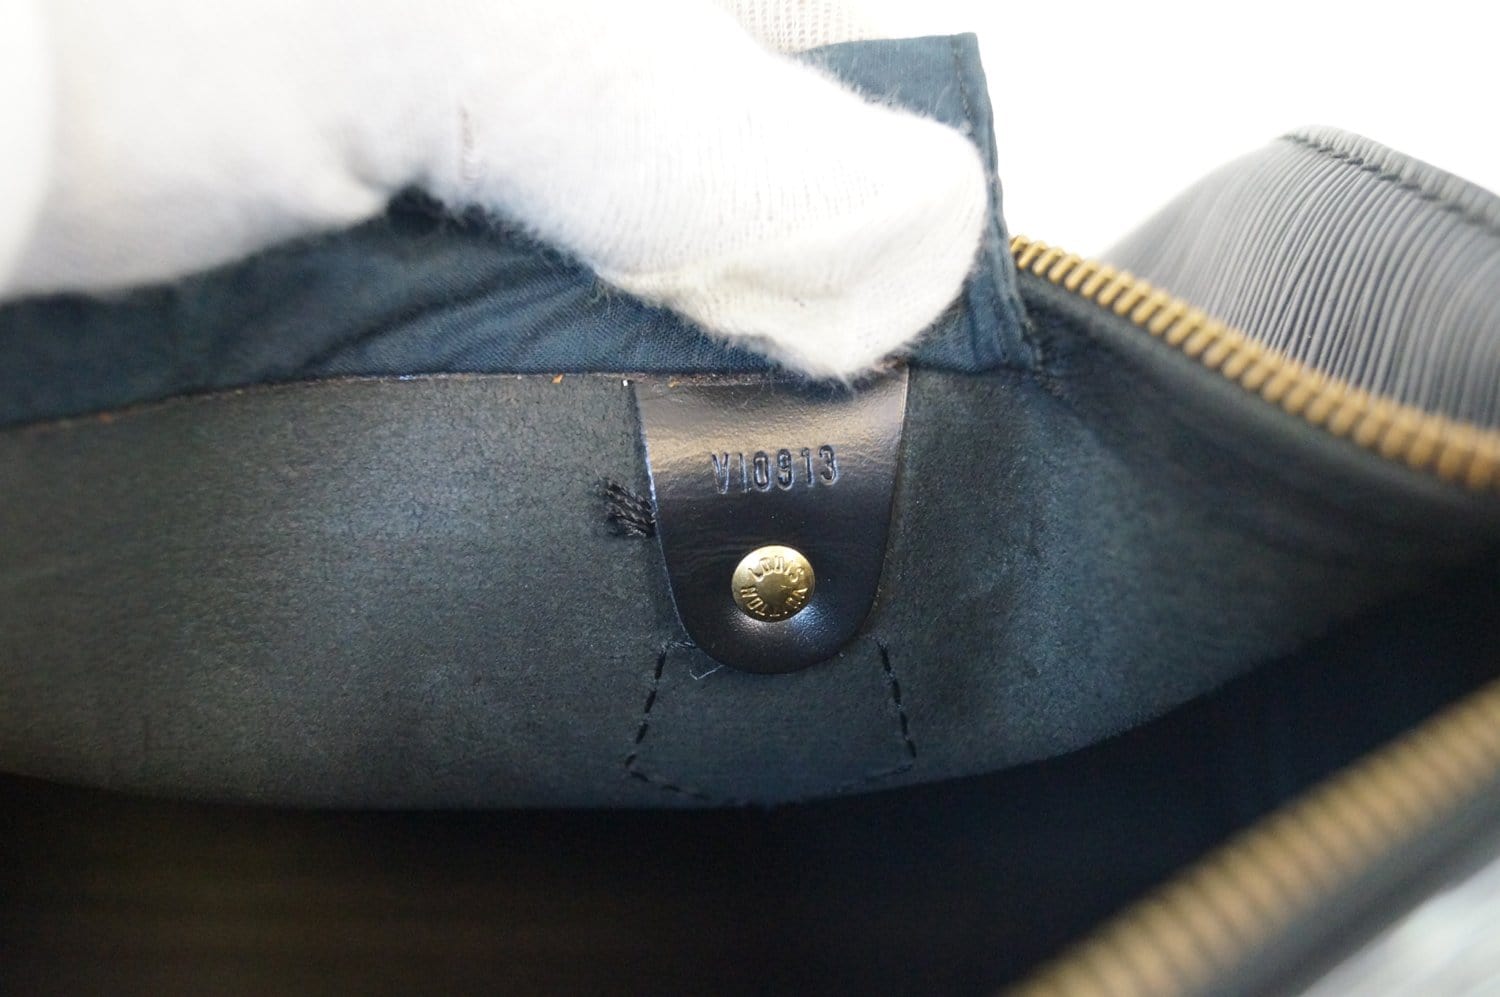 Speedy leather handbag Louis Vuitton Black in Leather - 35886400